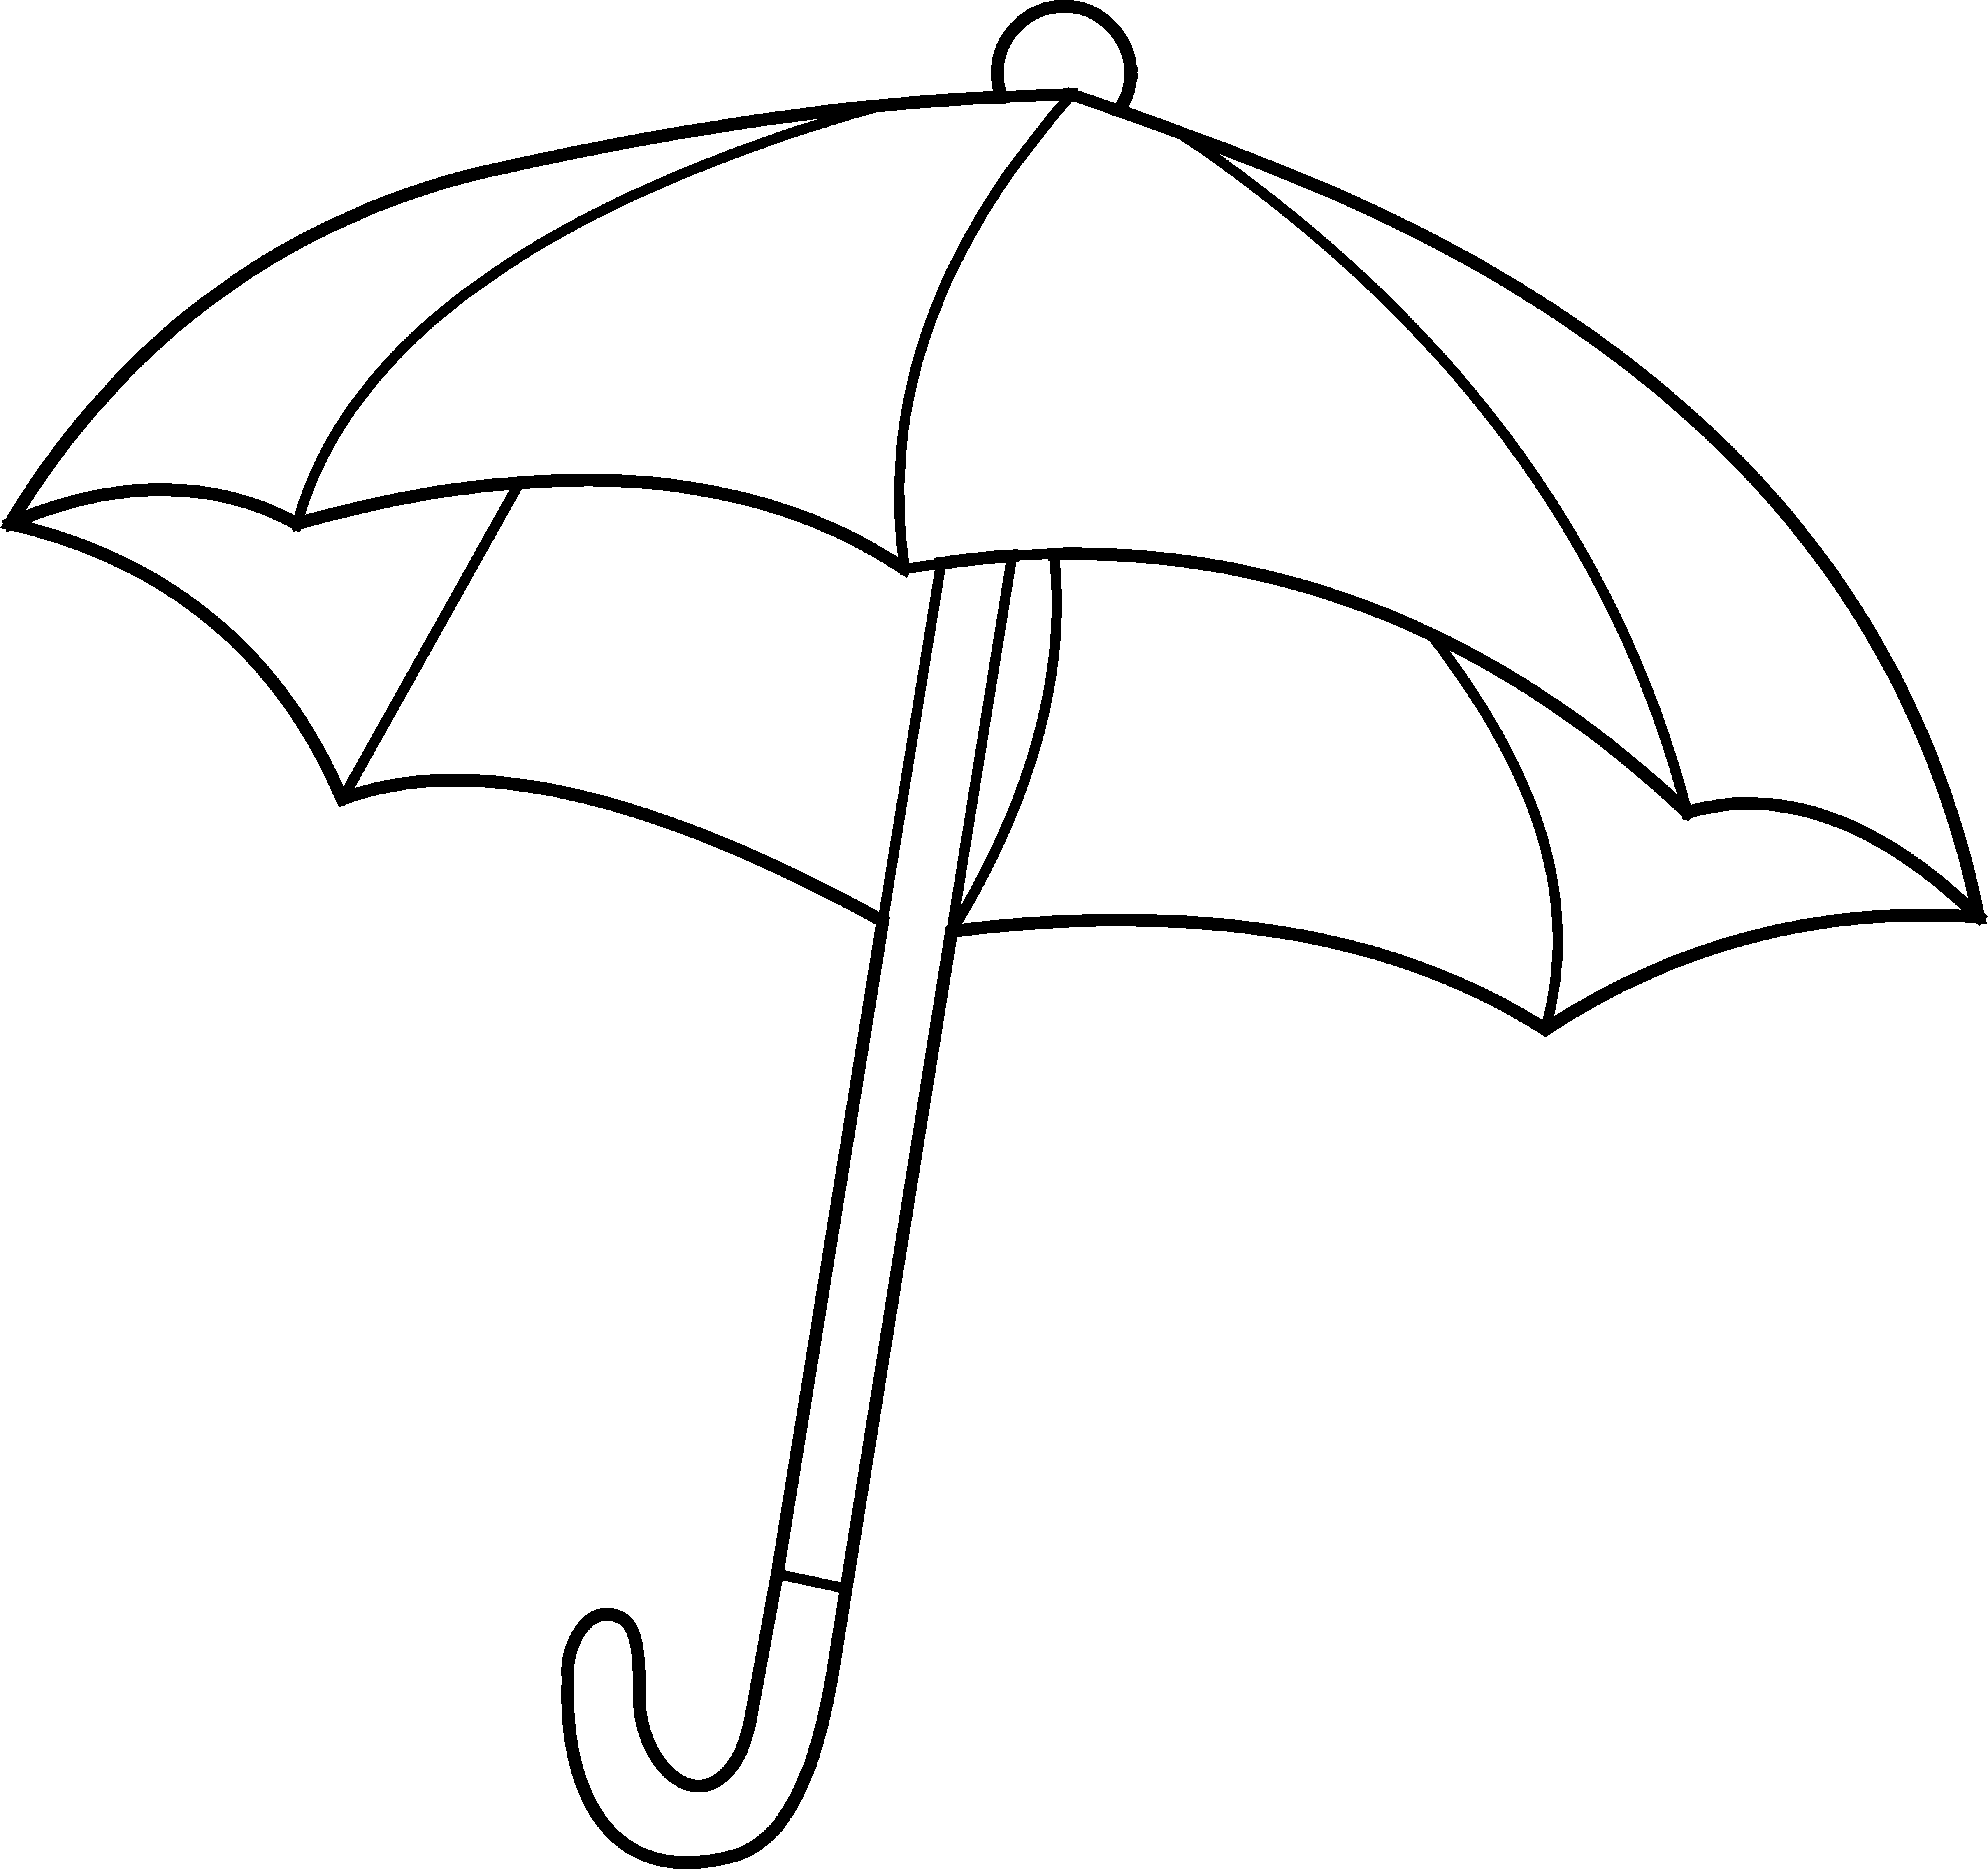 Clip Arts Related To : umbrella black and white. 